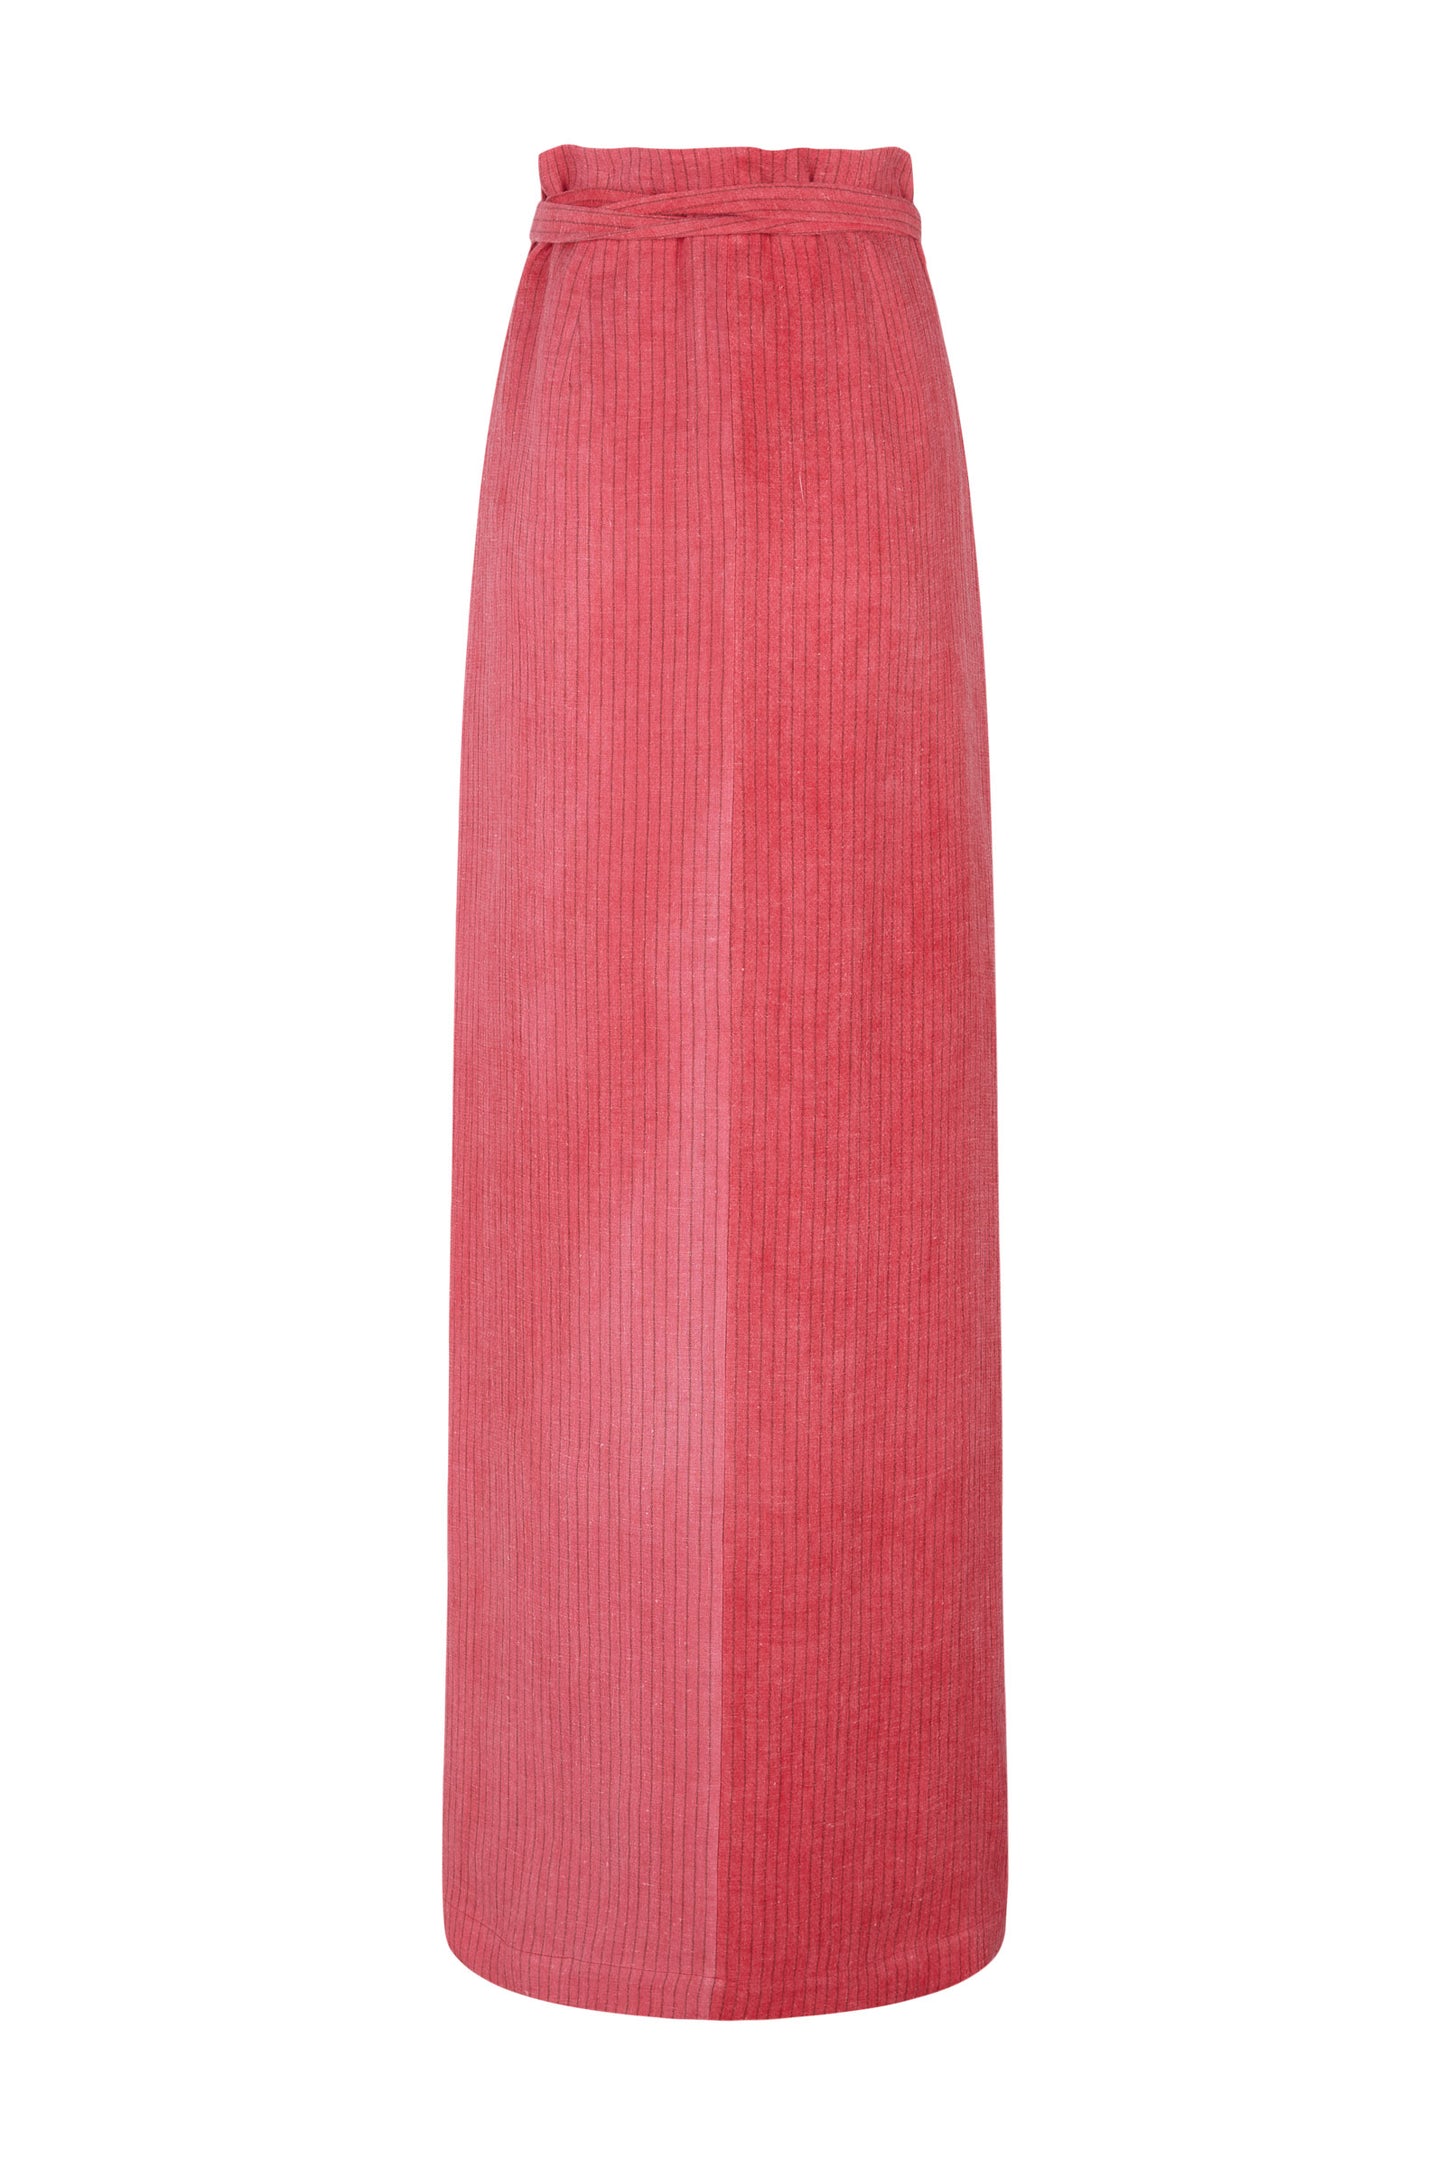 Lupe, striped maltinto linen skirt